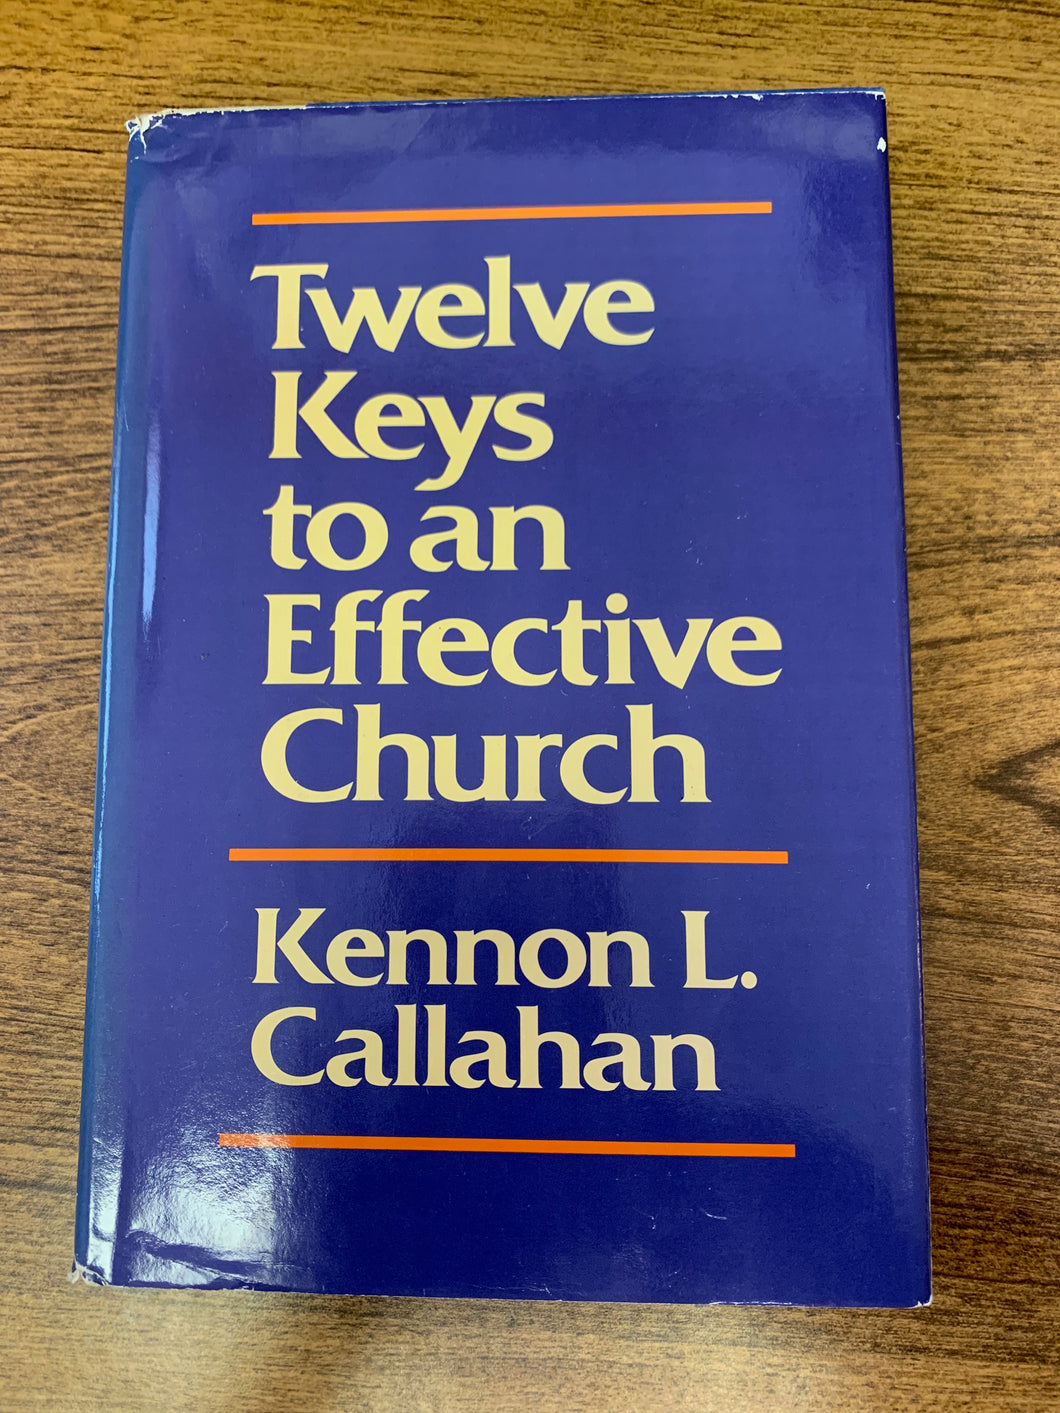 Twelve Keys to an Effective Church by Kennon L. Callahan